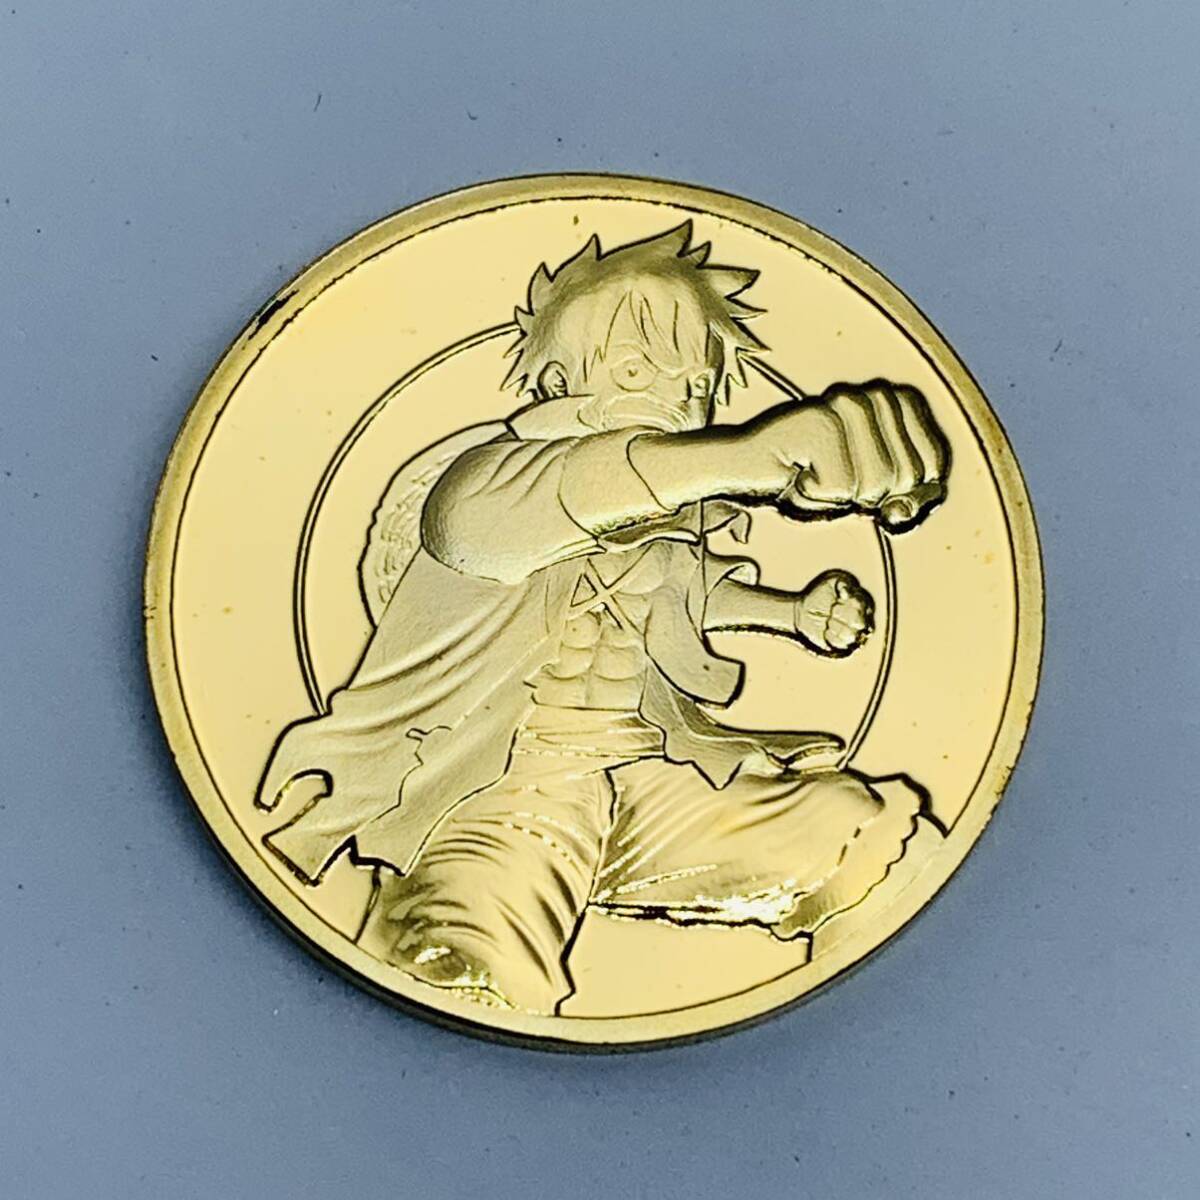 GU330日本記念メダル ワンピース ルフィ チャレンジコイン 美品 硬貨 古銭 コレクションコイン 貨幣 重さ約17g _画像2